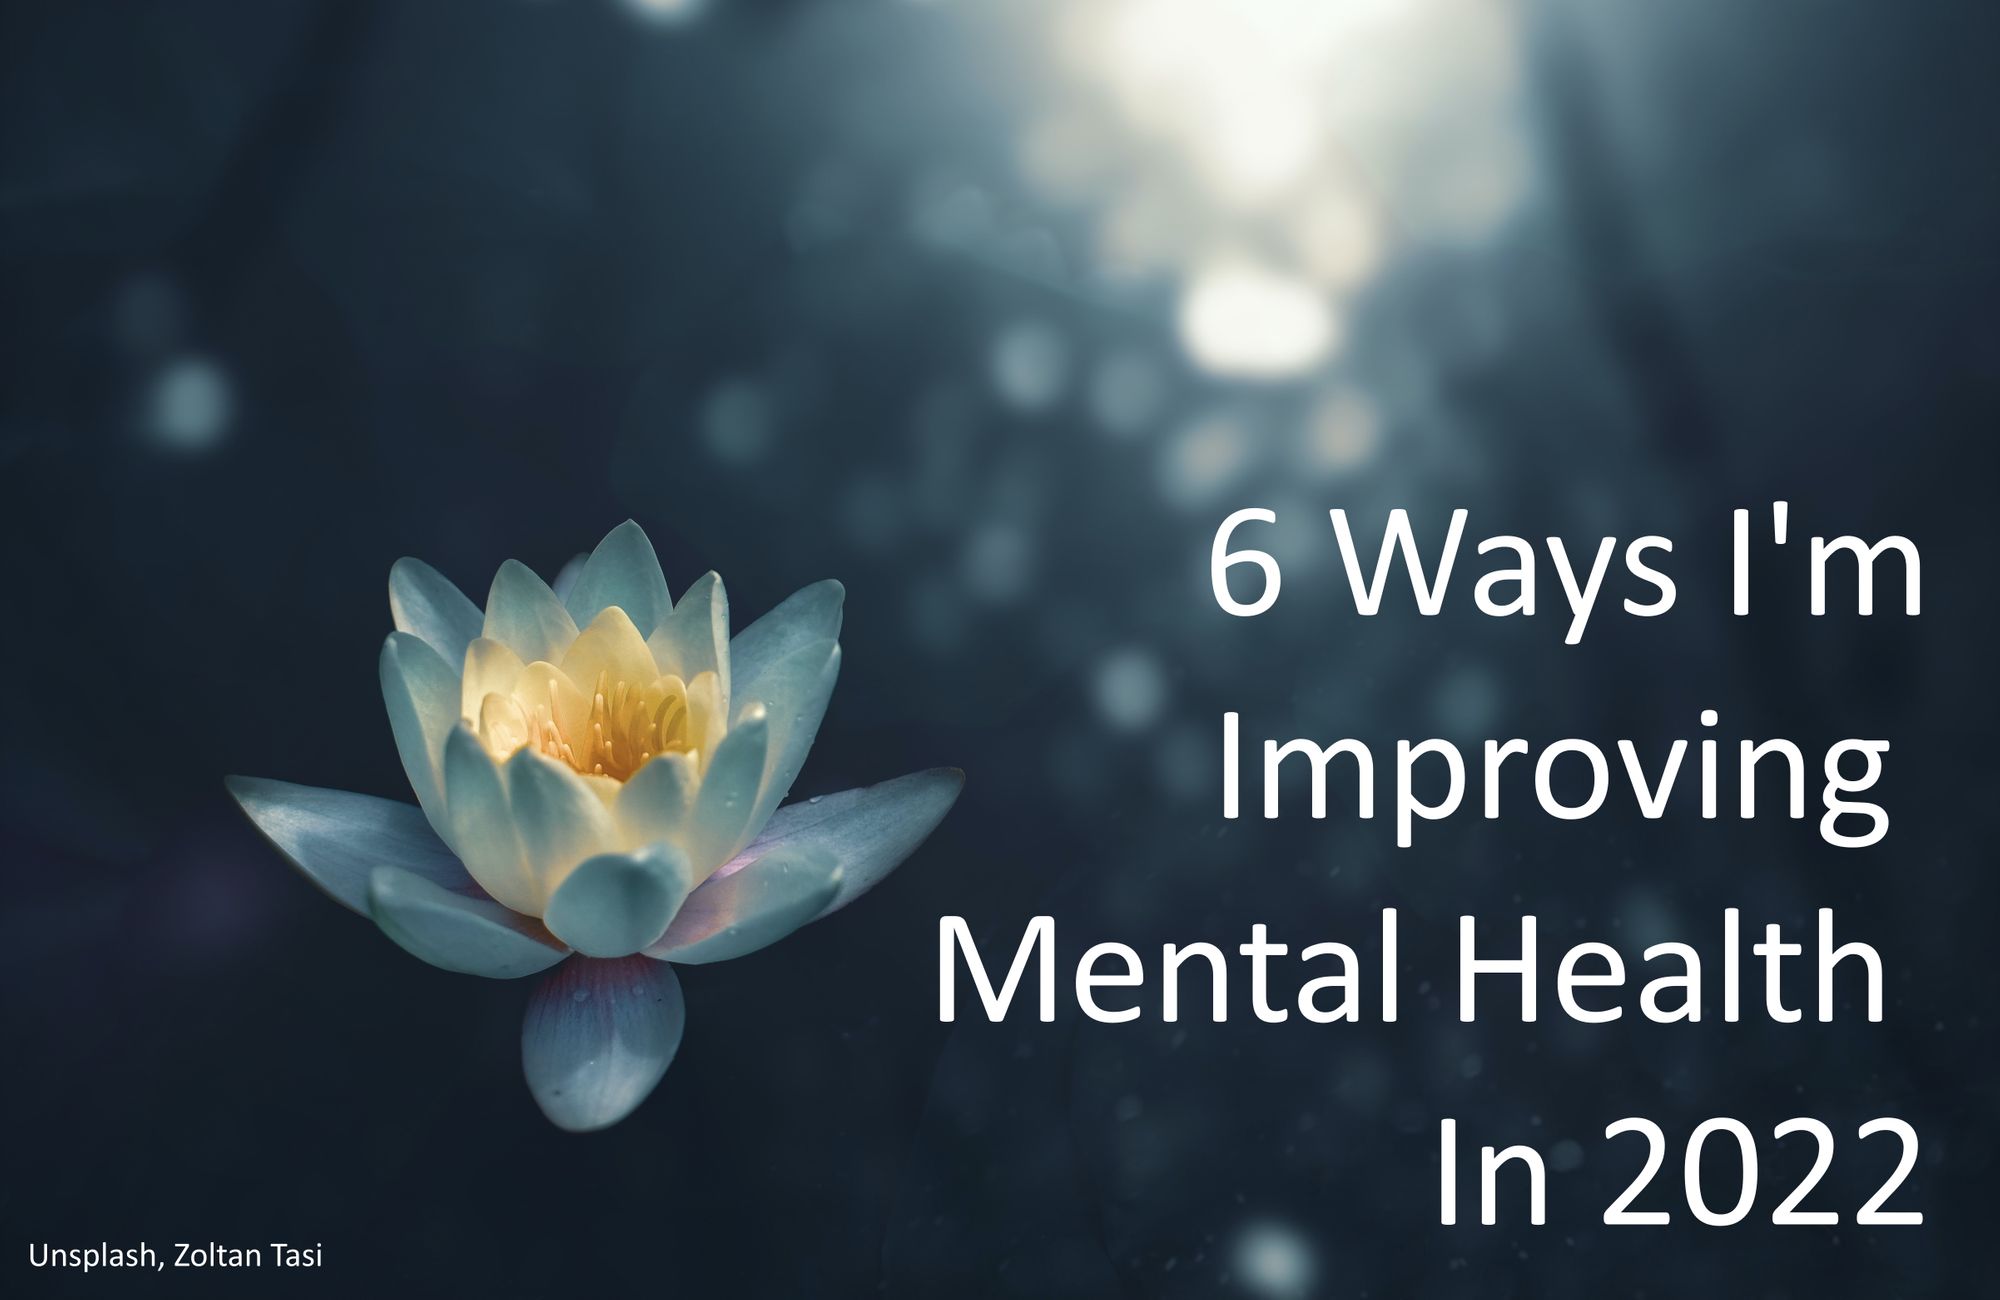 6 Ways I'm Improving Mental Health in 2022